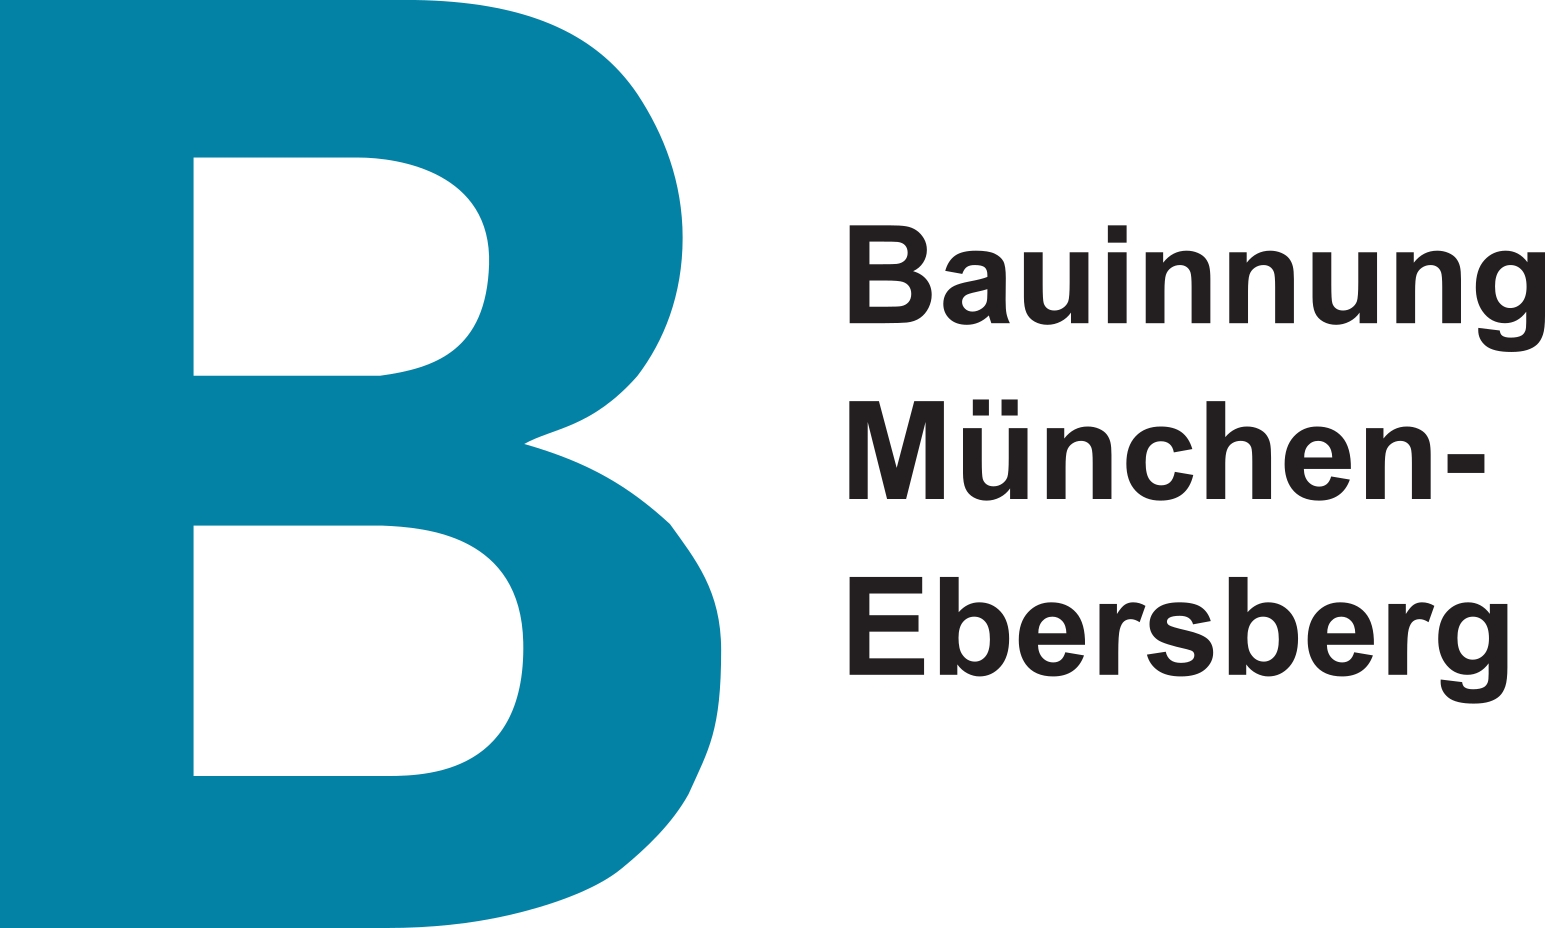 Bauinnung München-Ebersberg